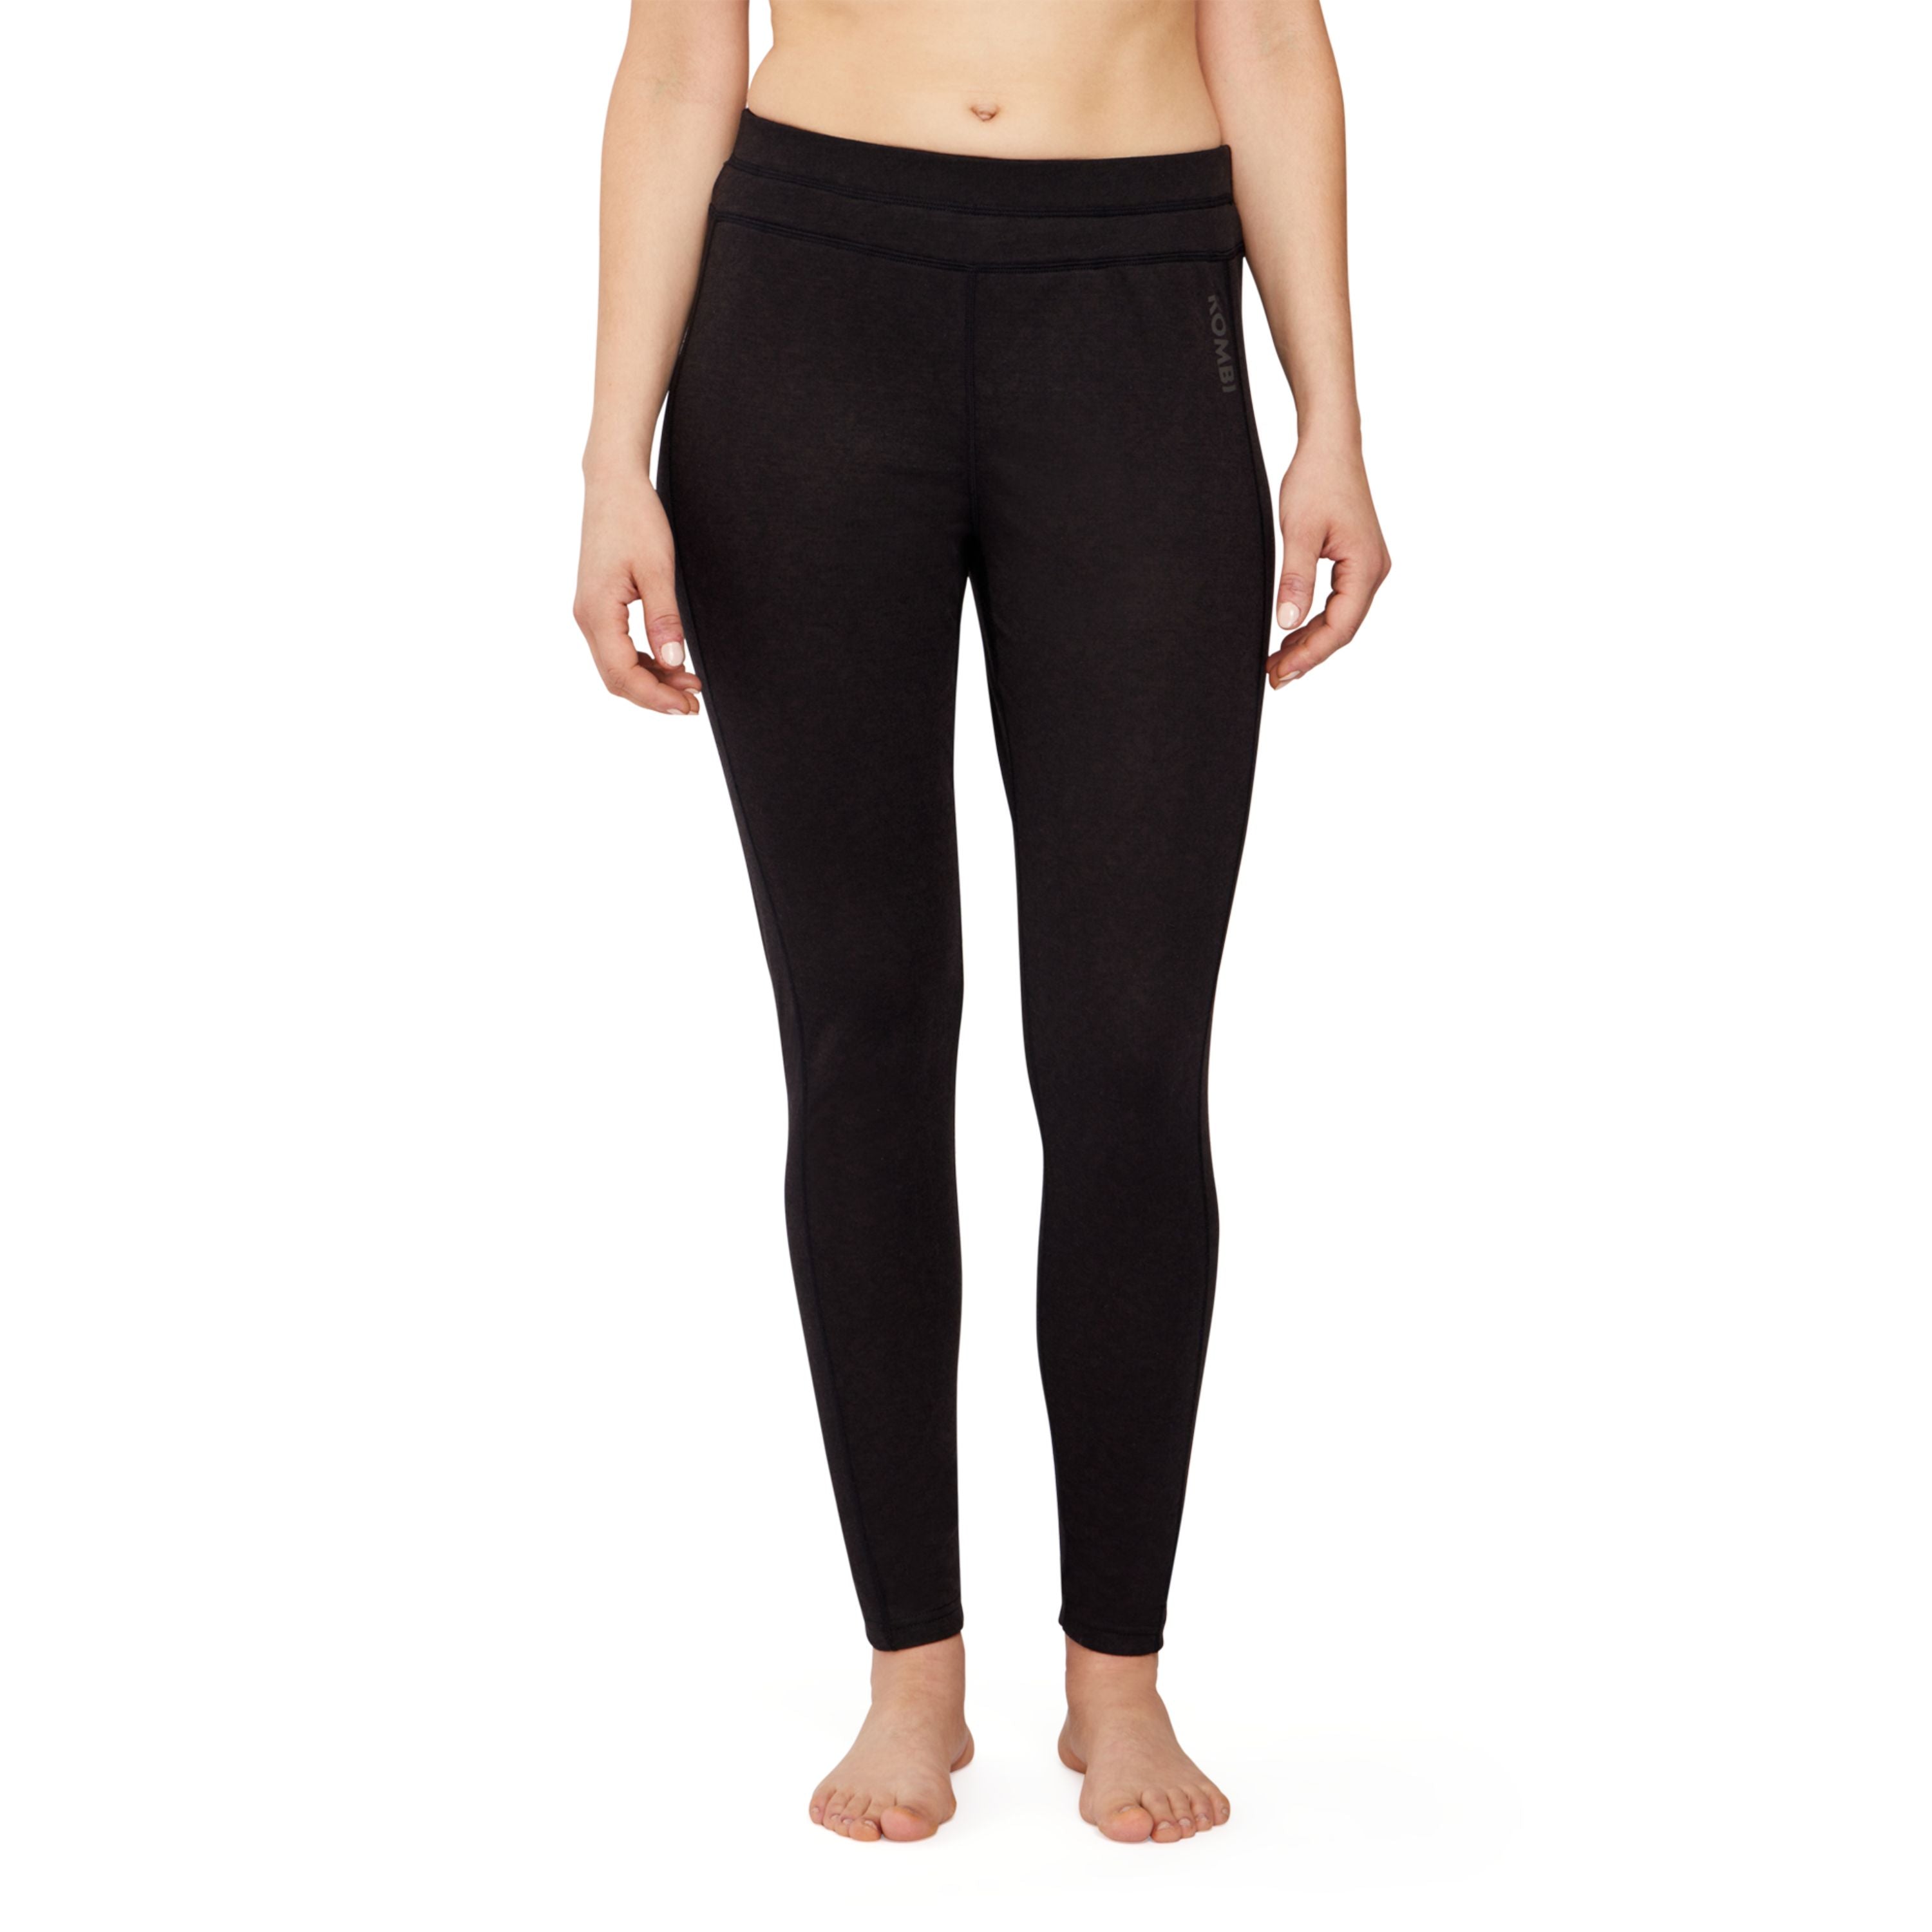 Pantalon sous-vêtement "Merinomix Pro" - Femme||"Merinomix Pro" Base layer bottom - Women’s